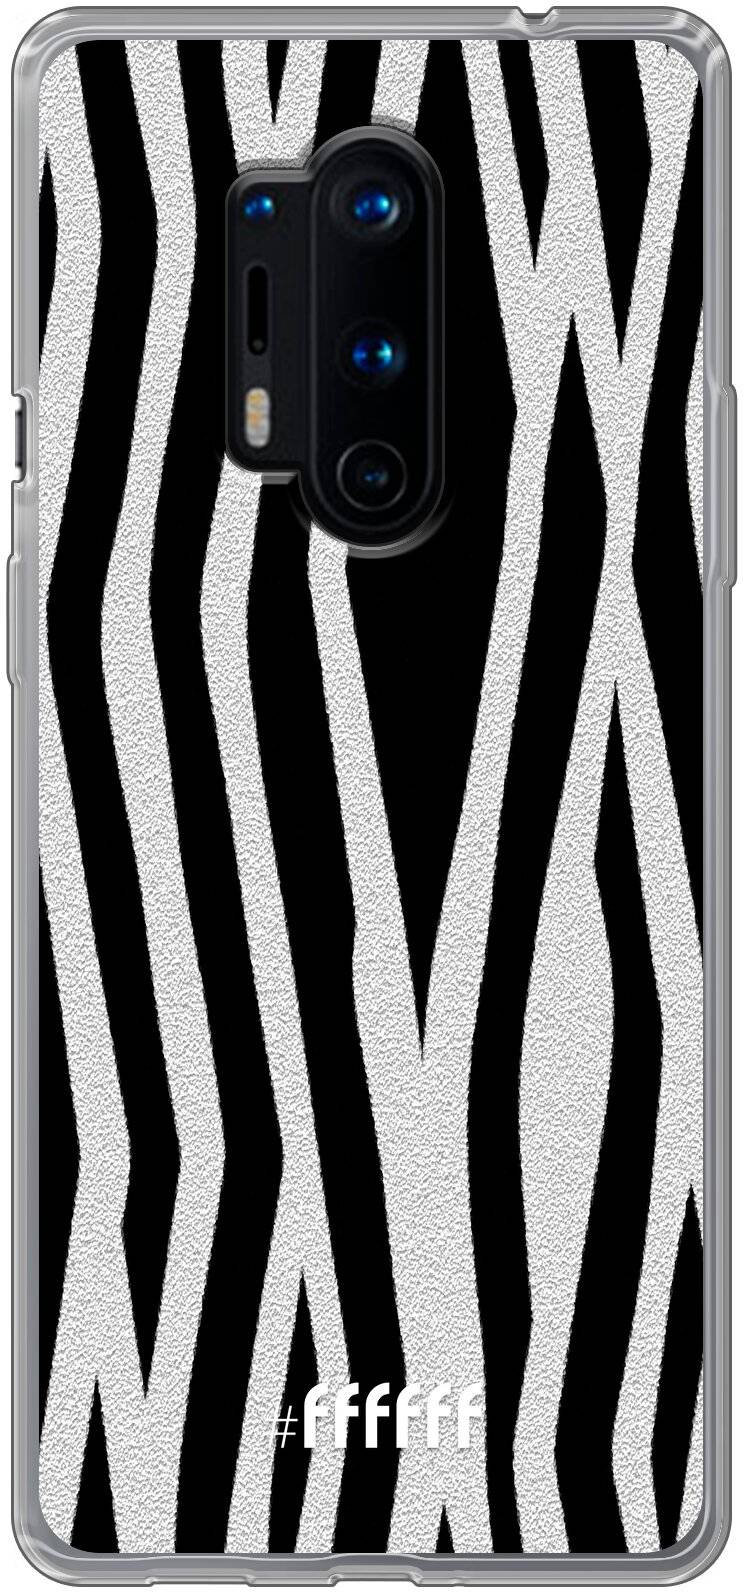 Zebra Print 8 Pro